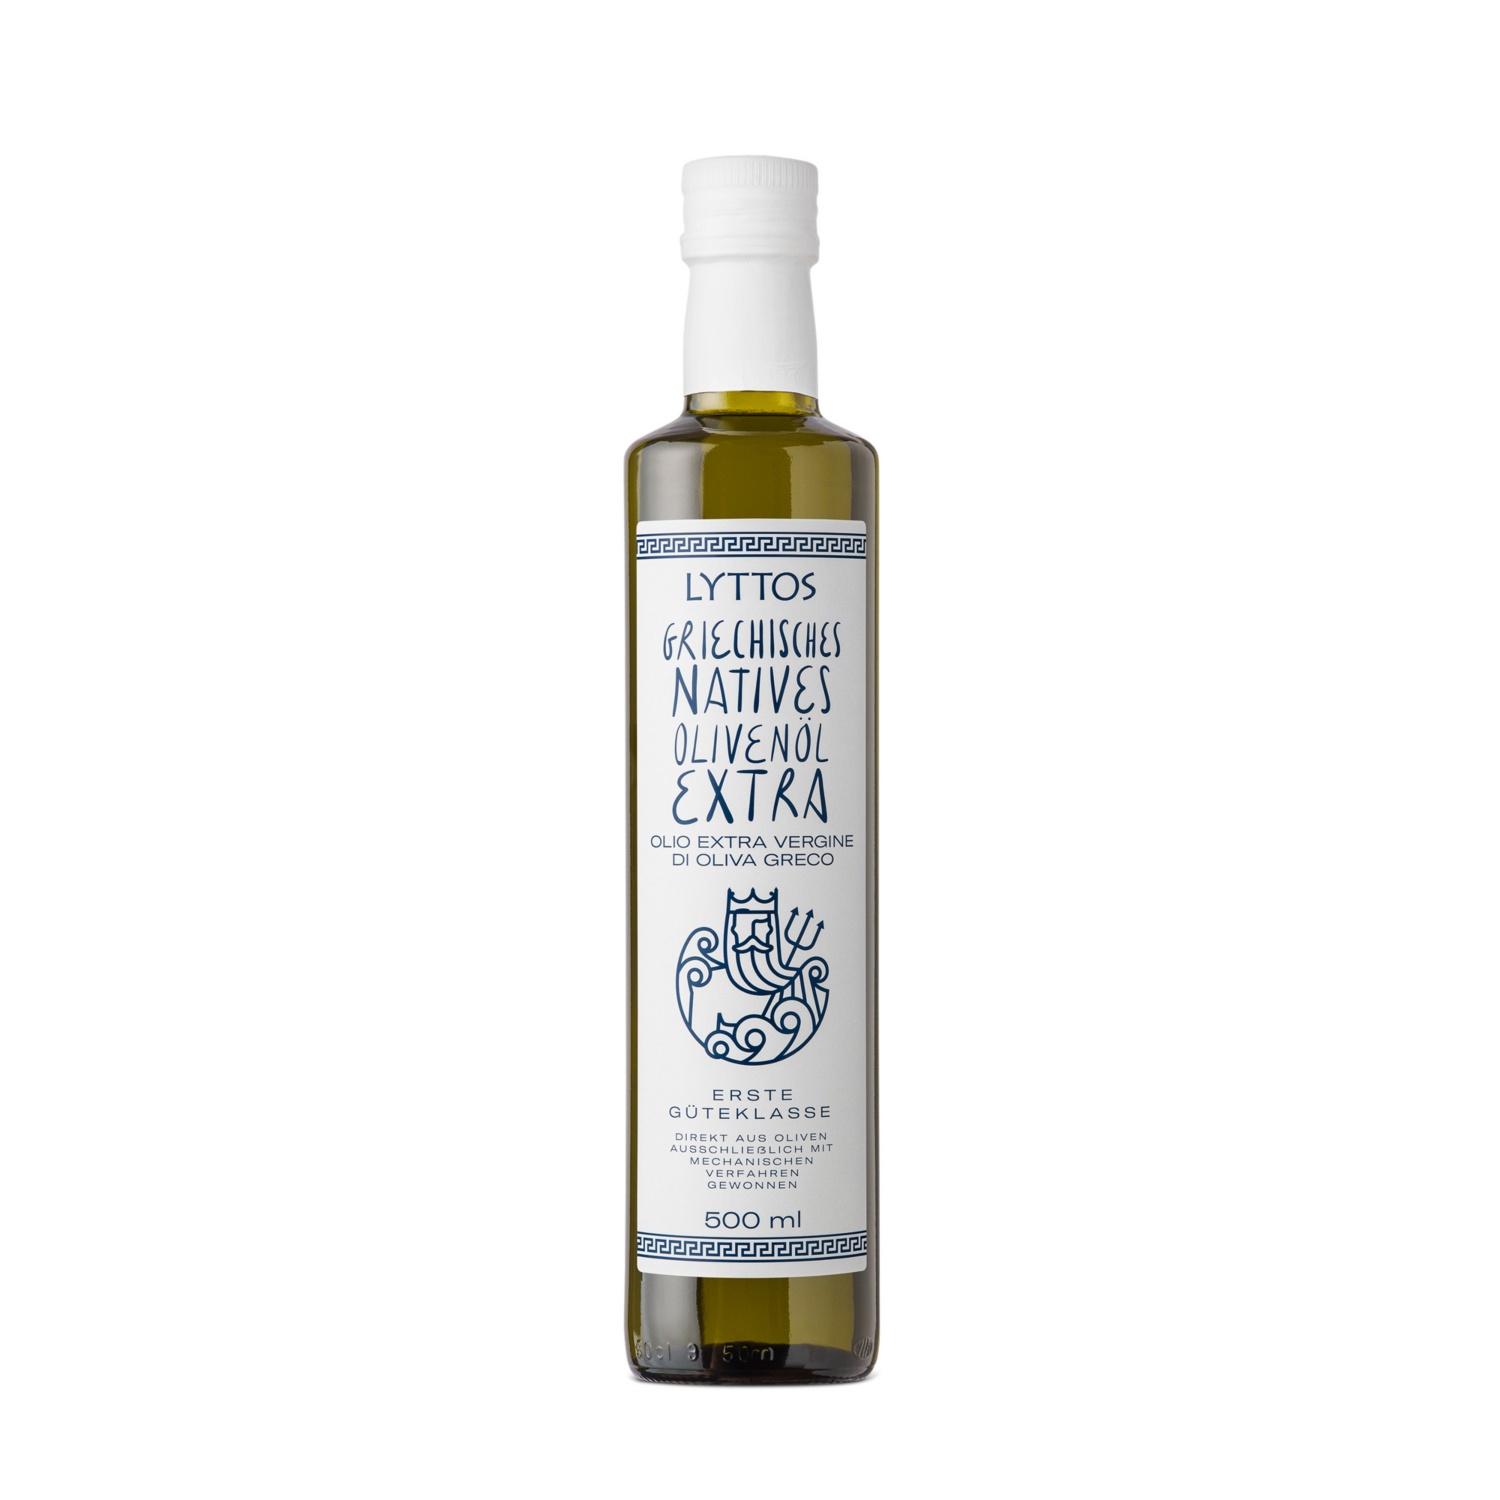 LYTTOS Olio d’oliva greco, extra vergine